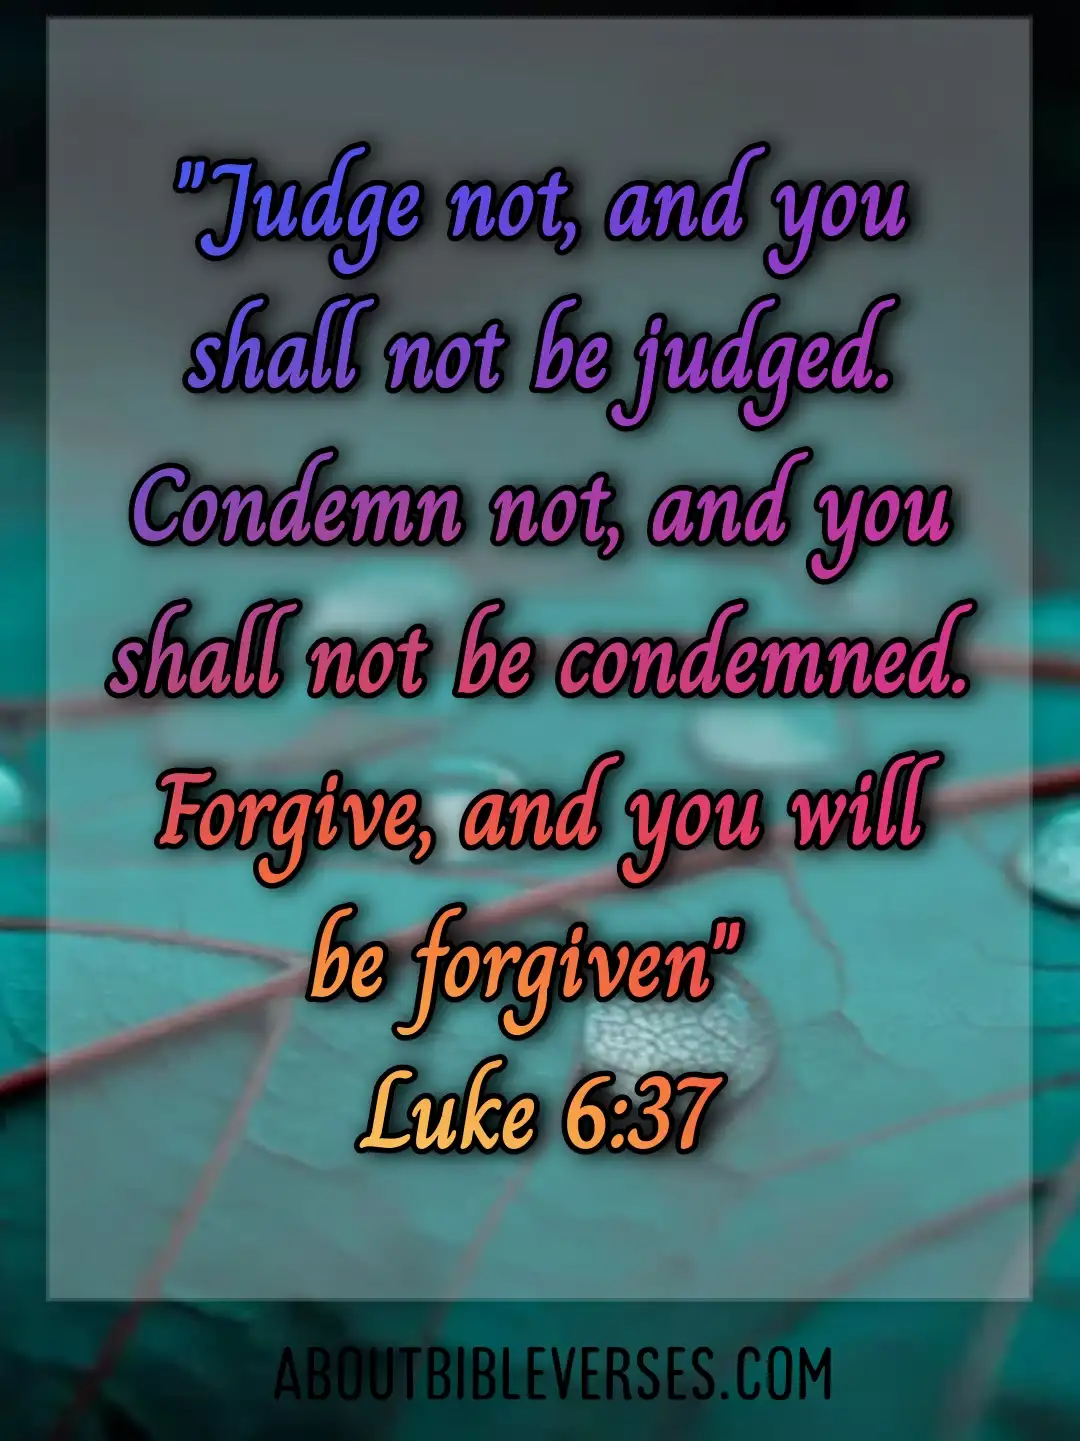 today bible verse (Luke 6:37)